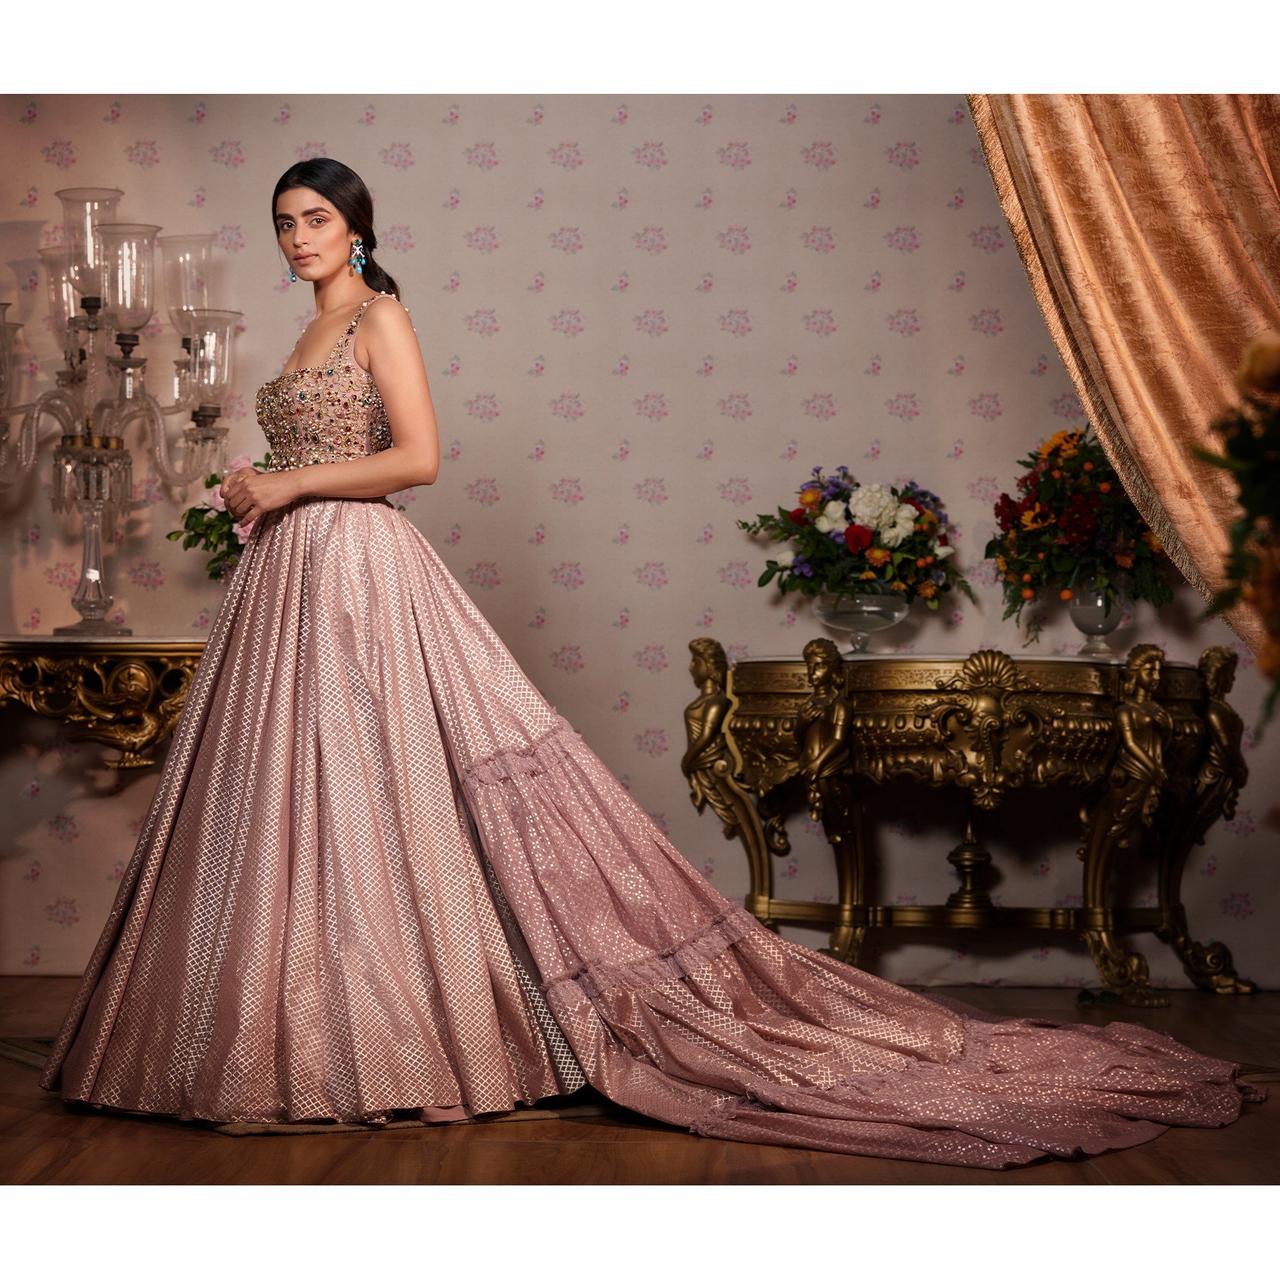 Beautiful Indian wedding Dress for Bride # B2067 | Designer wedding dresses,  Classy wedding dress, Elegant bridal dress